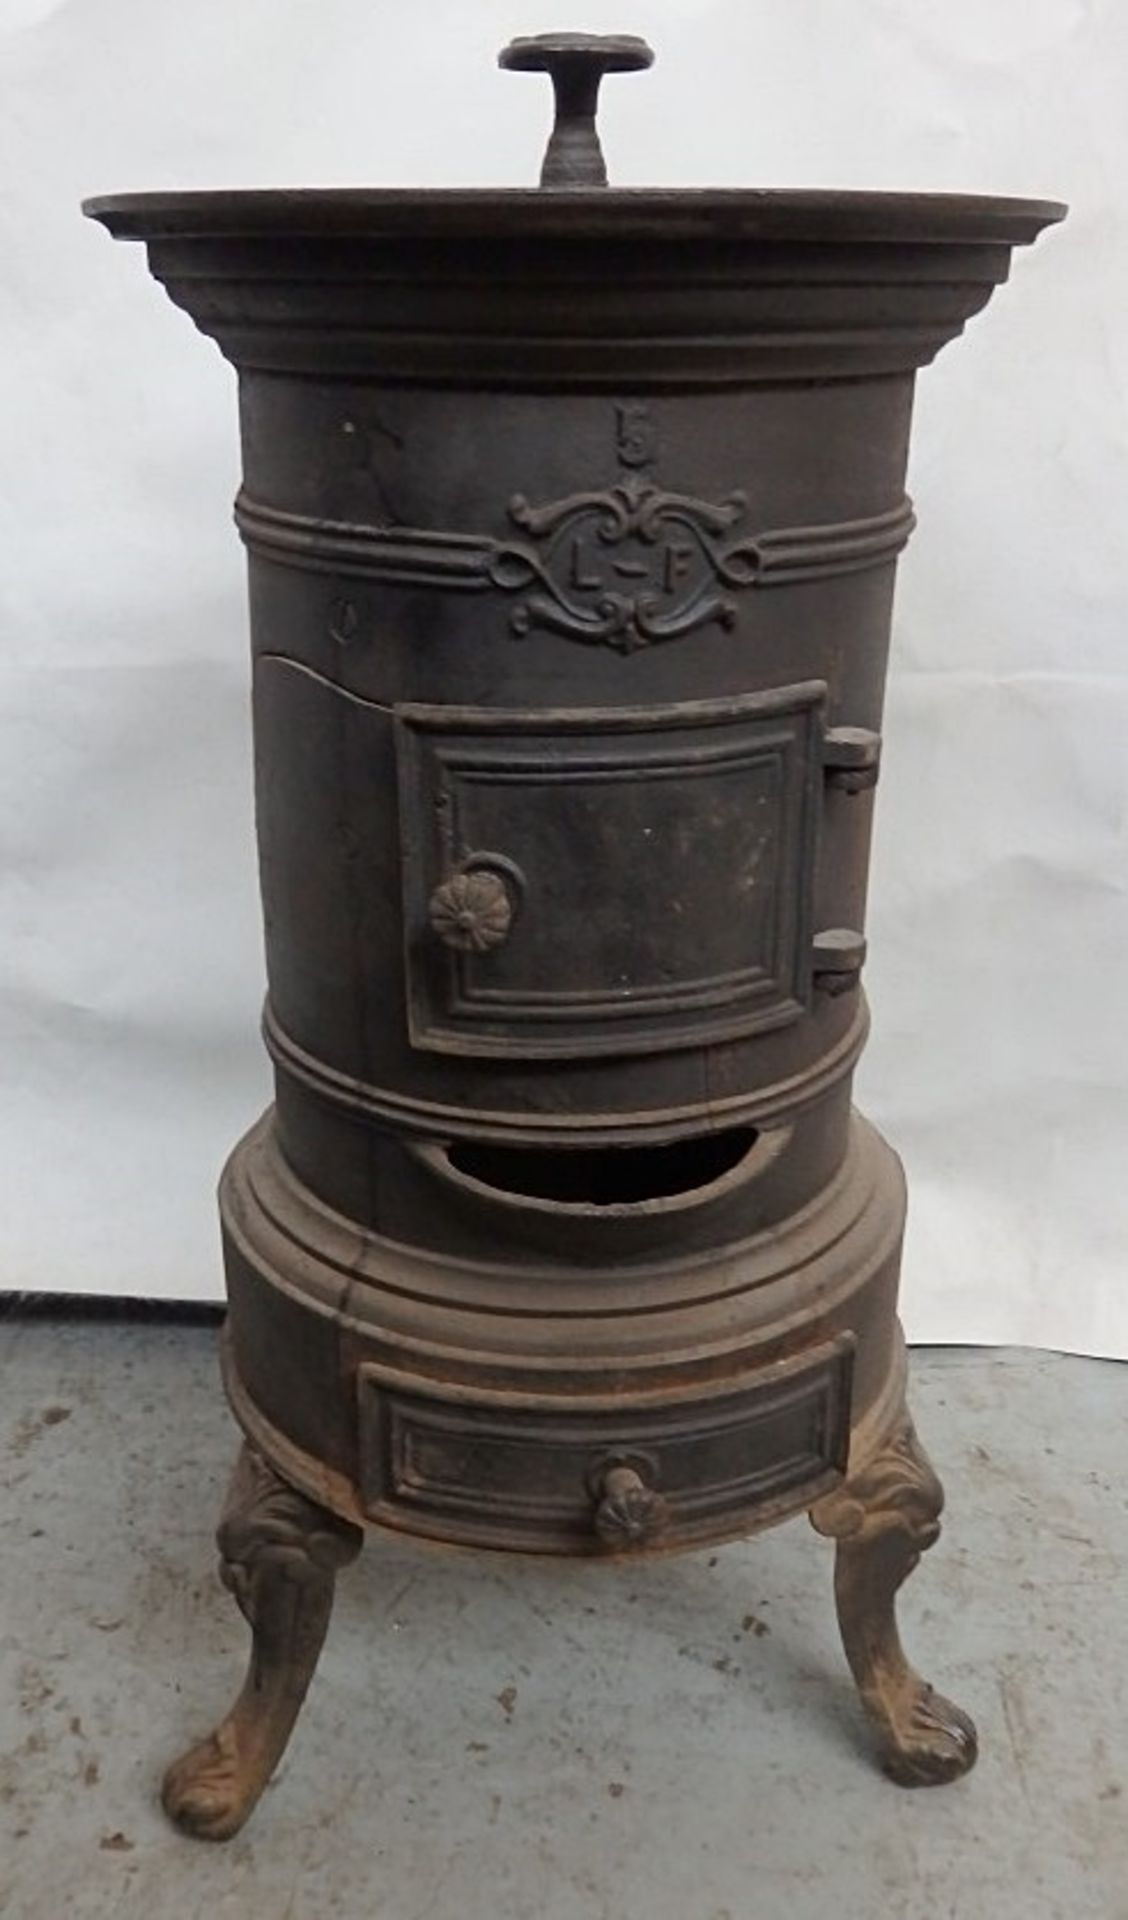 1 x Reclaimed Antique Cast Iron Potbelly Wood Burner / Stove - Dimensions: H61, Diameter 30cm - Ref - Image 15 of 18